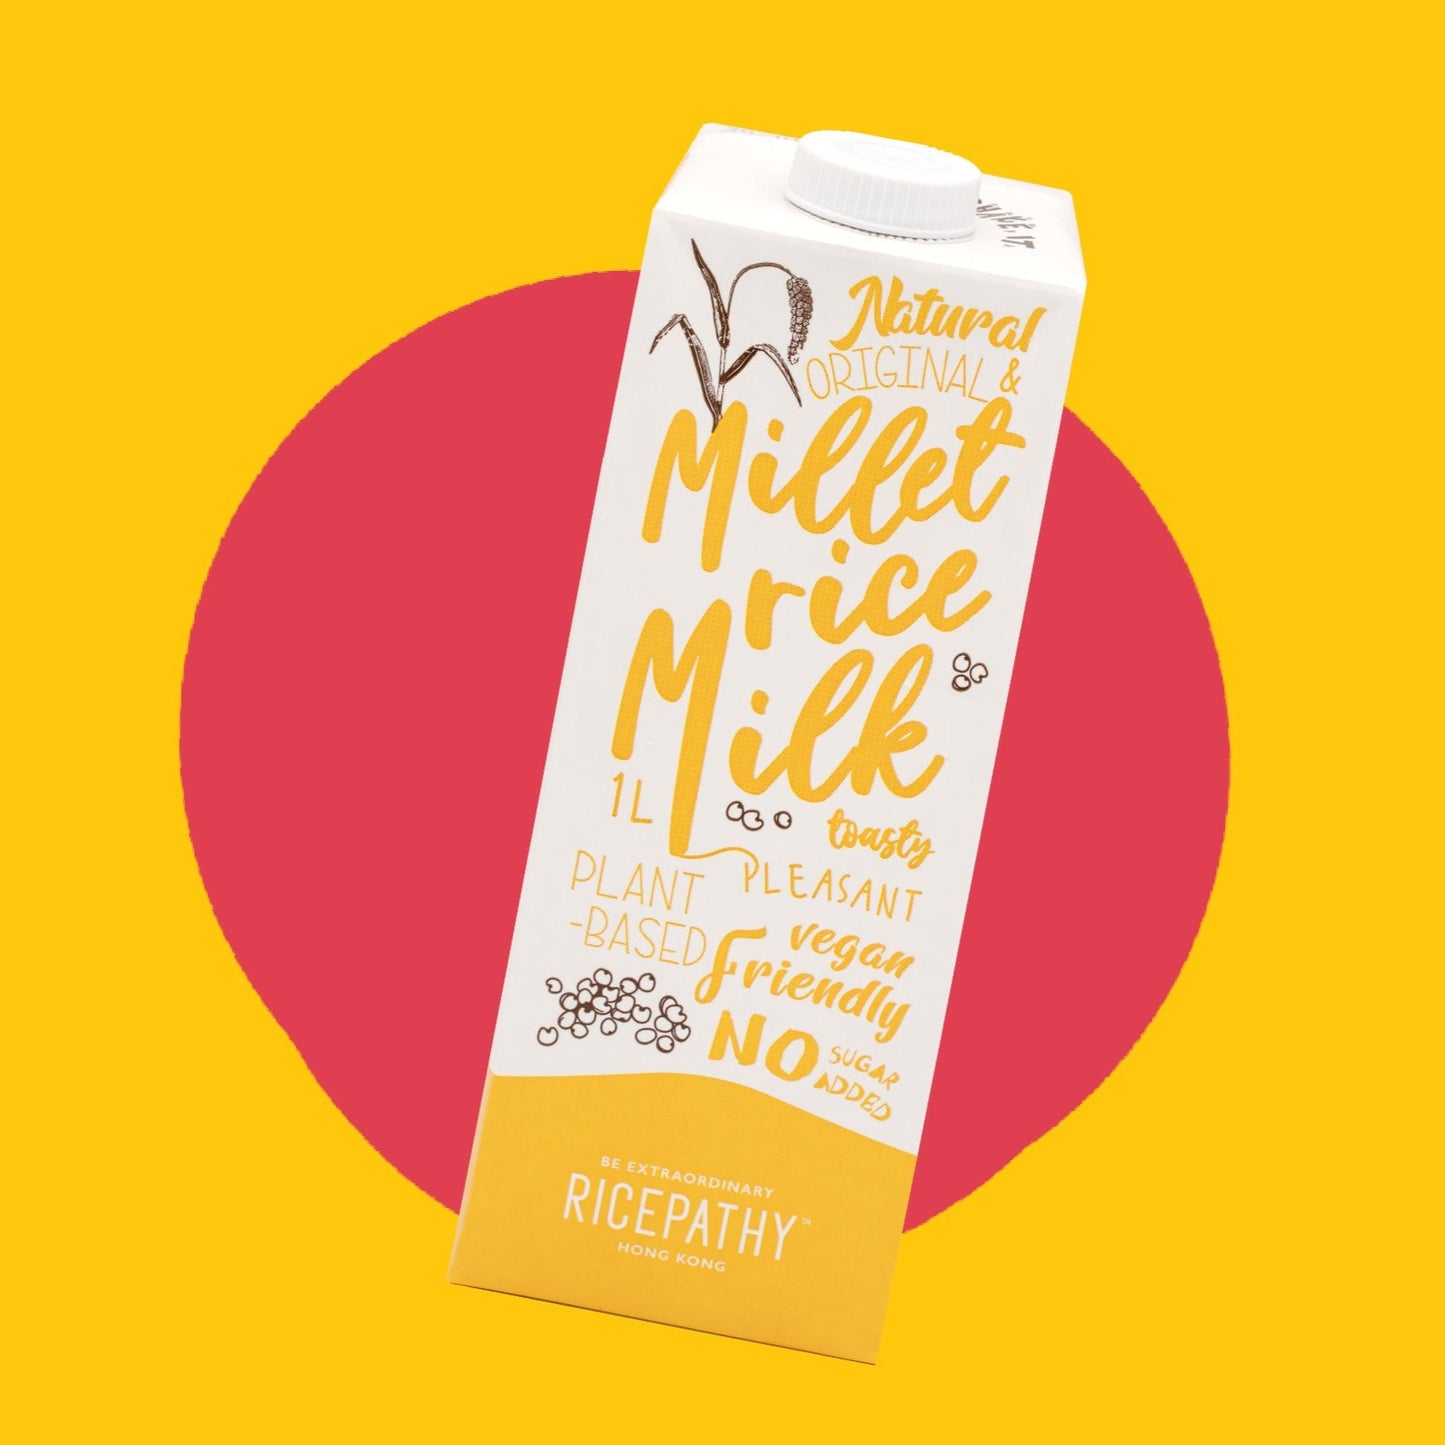 RICEPATHY millet rice milk profile pic